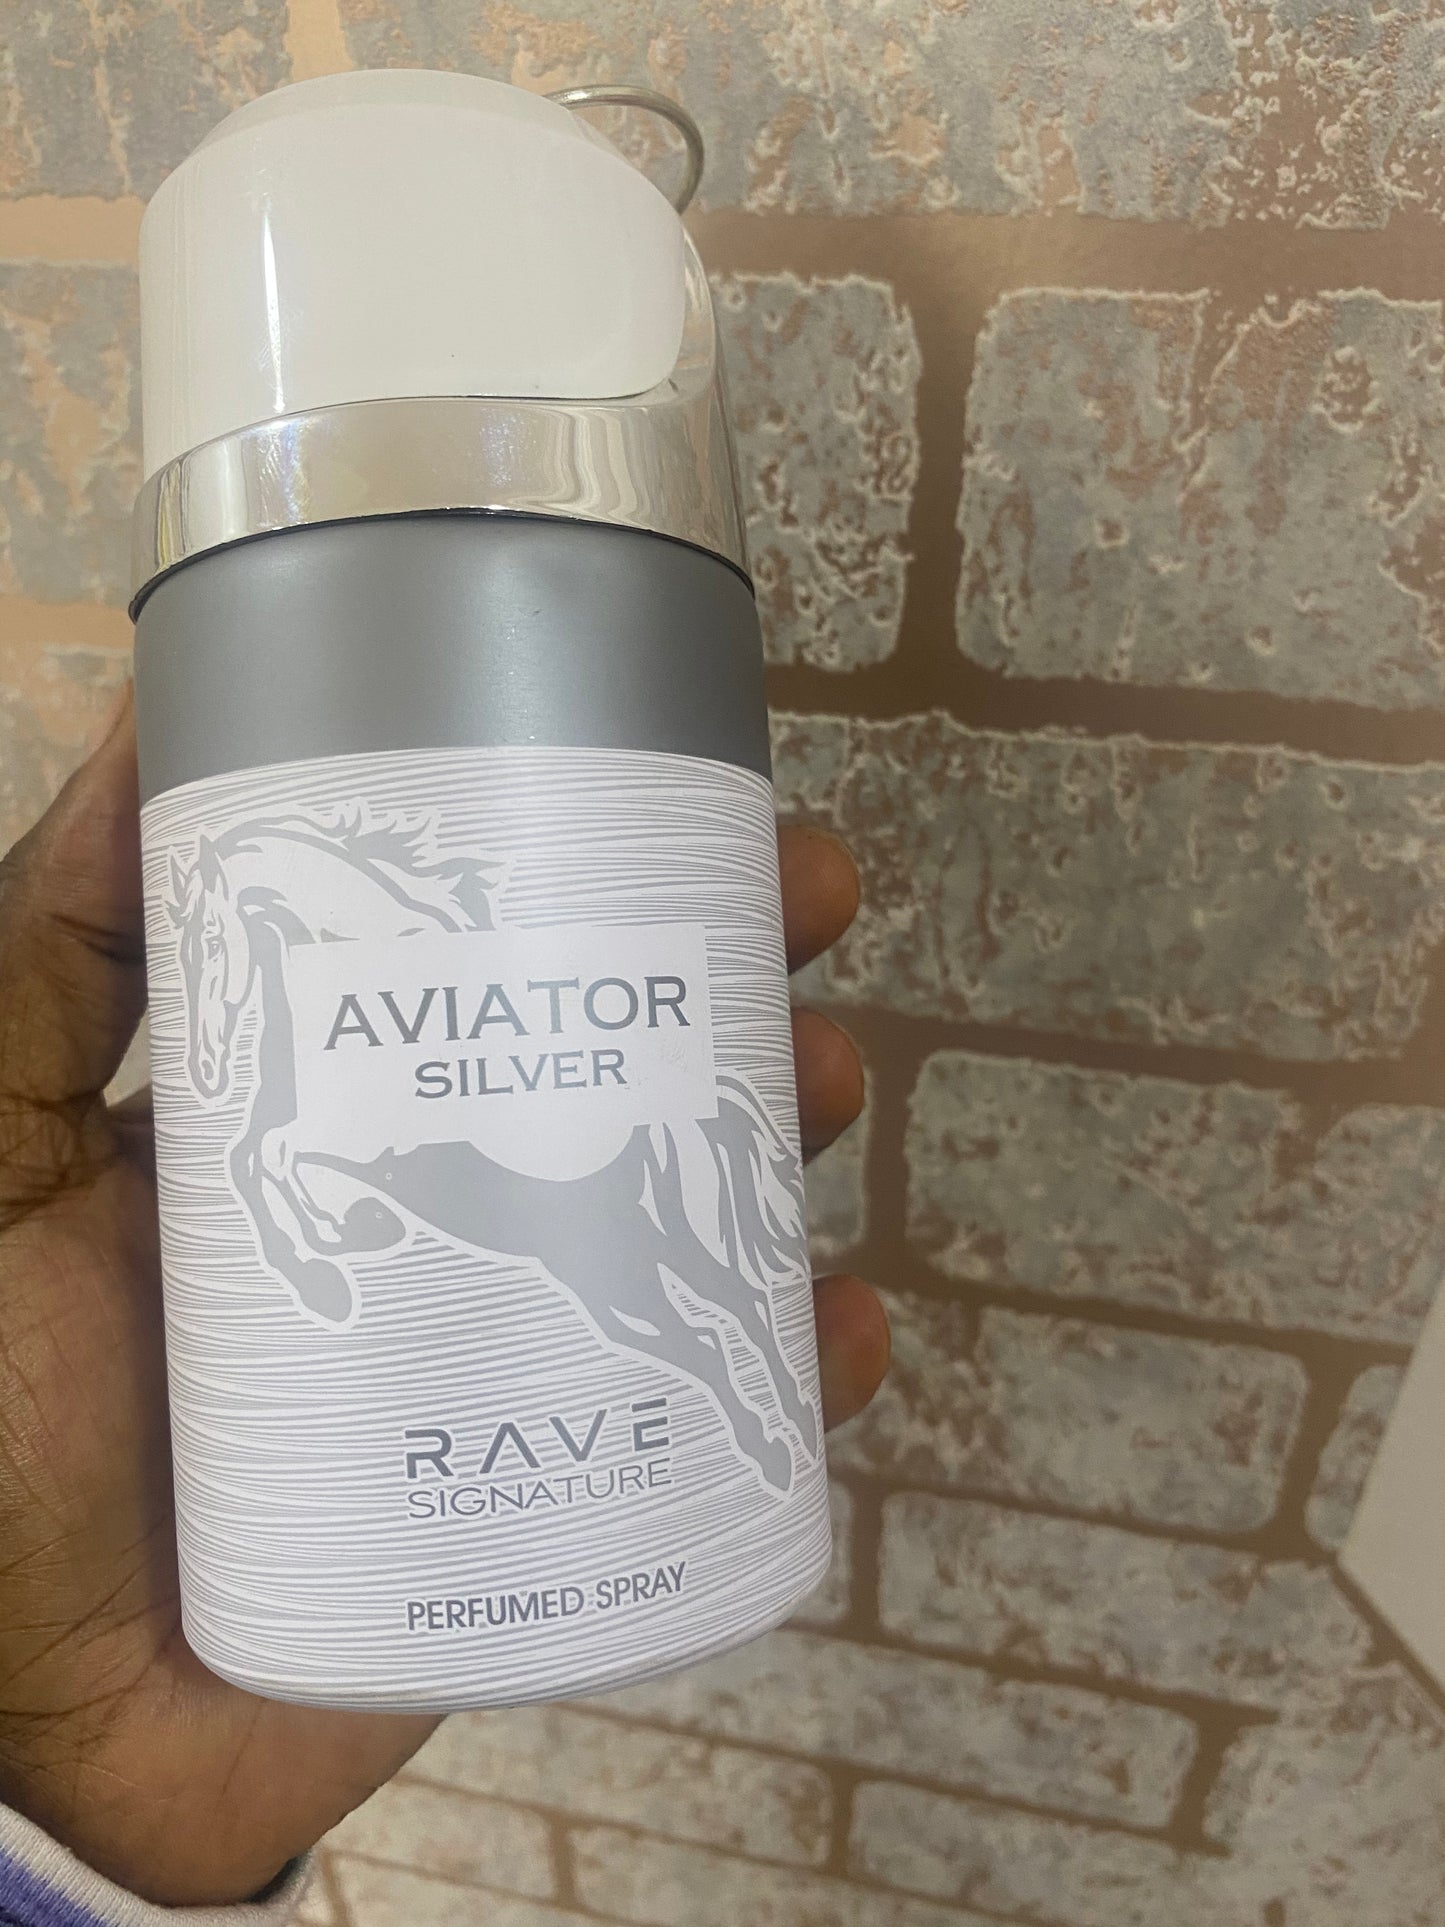 Rave Signature Aviator Silver Spray